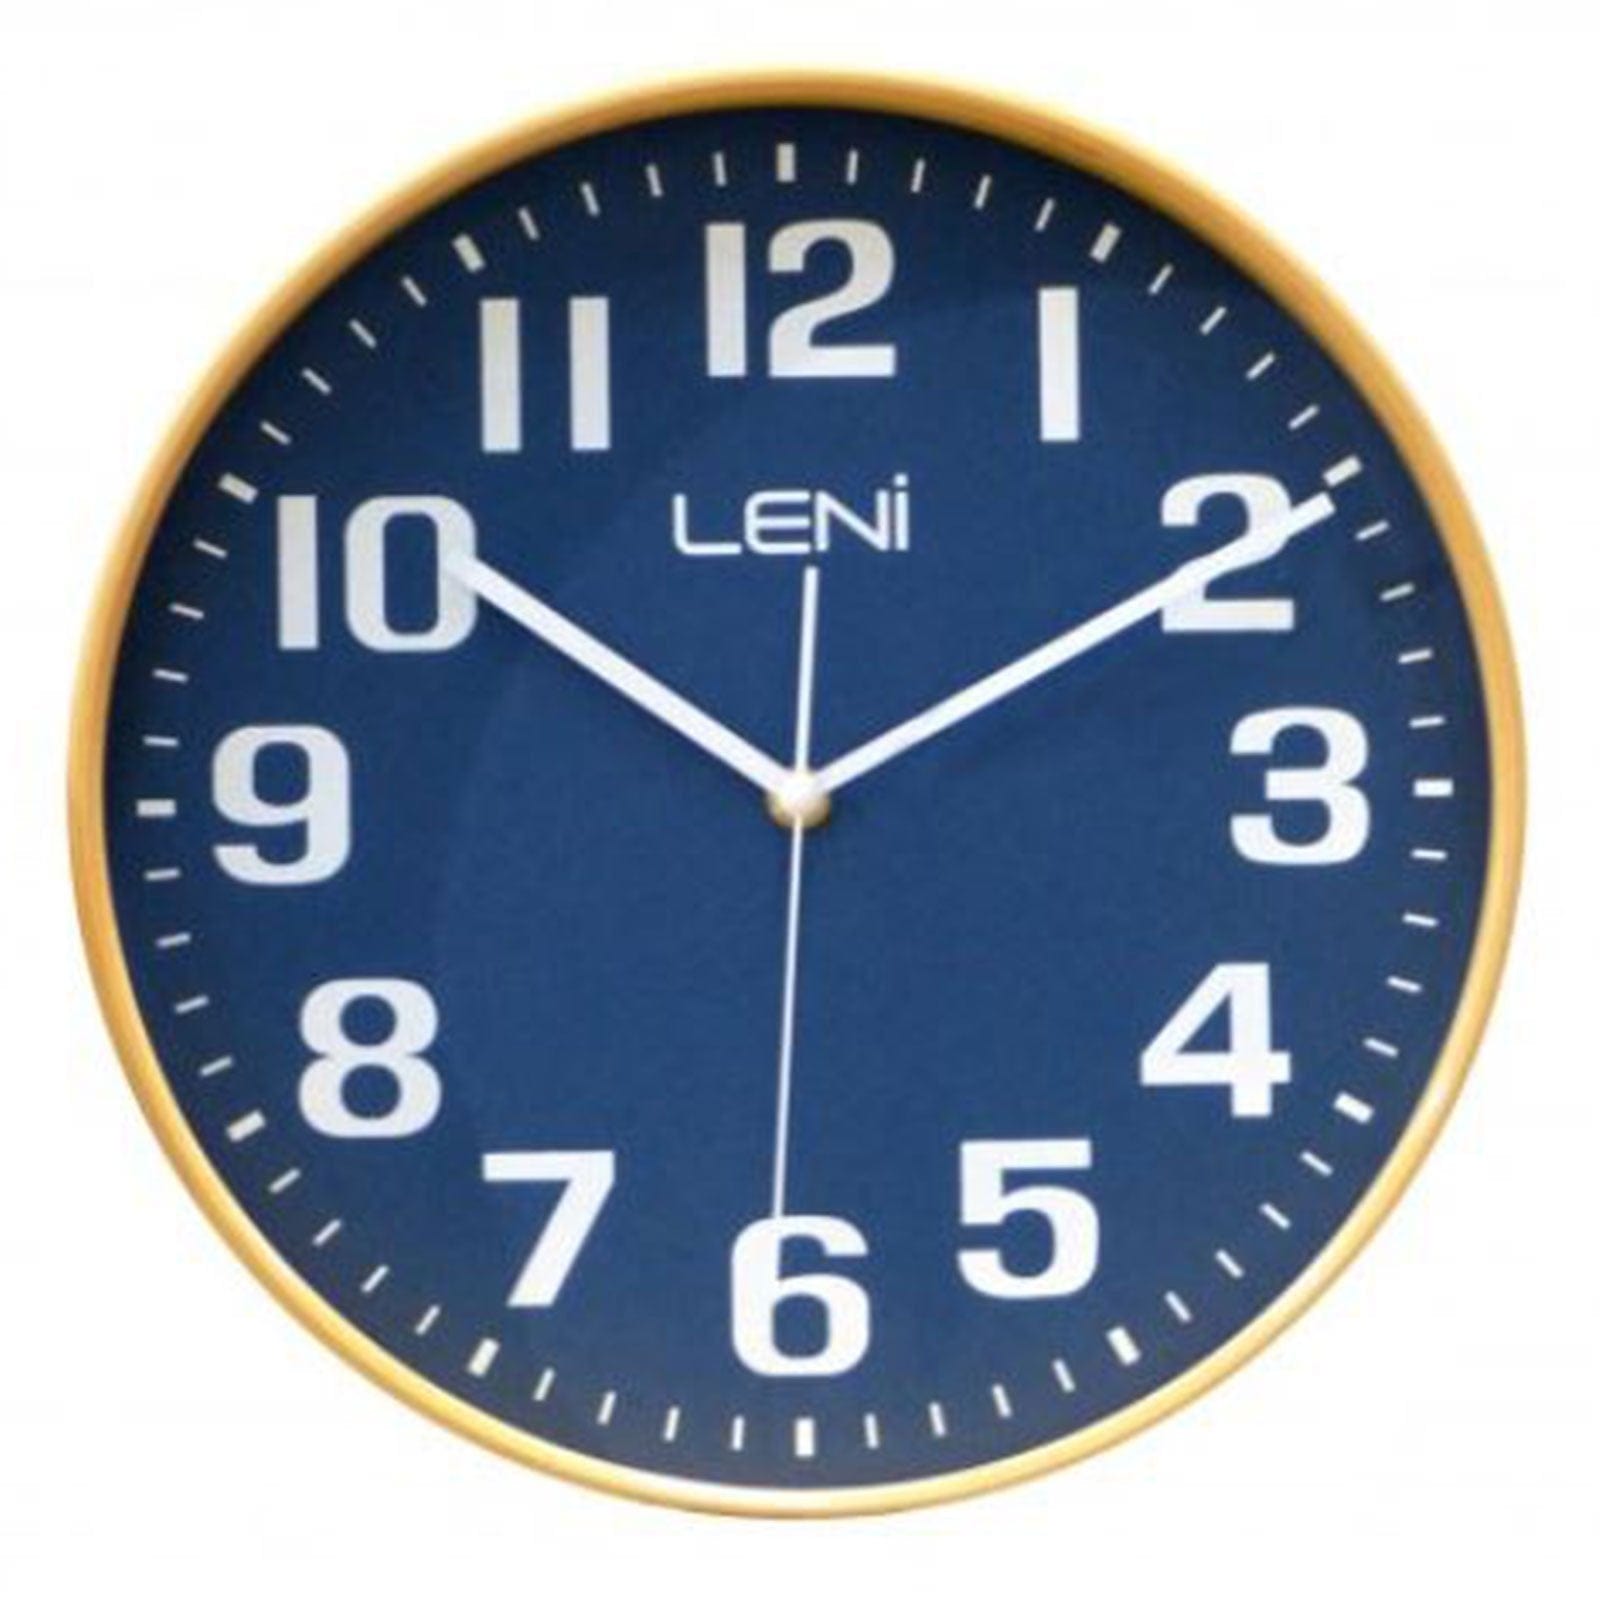 40cm Leni Wood Wall Clock - Navy.